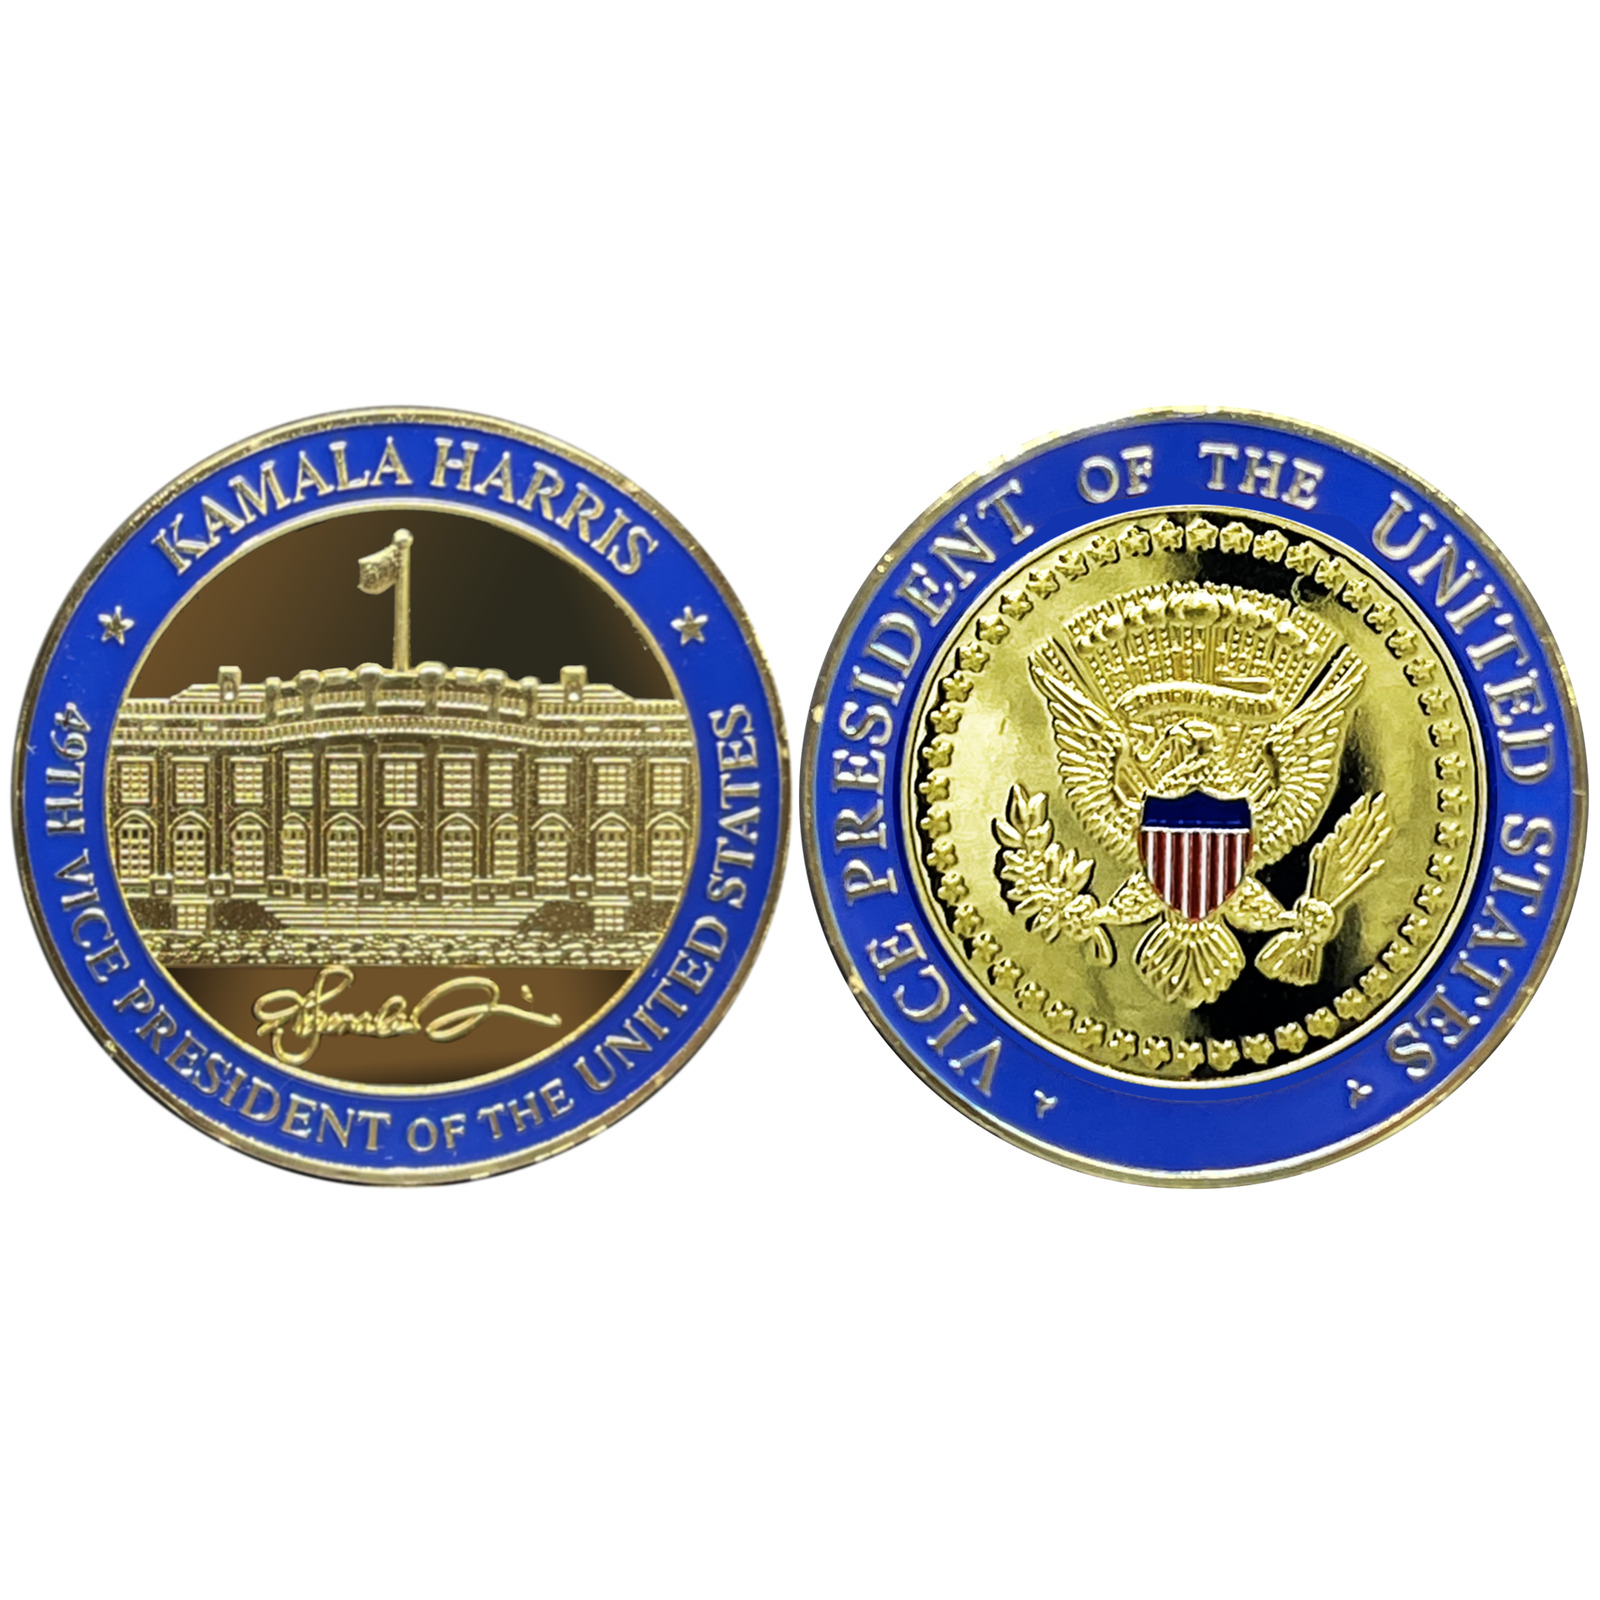 Vice President Kamala Harris White House Challenge Coin BL15-006